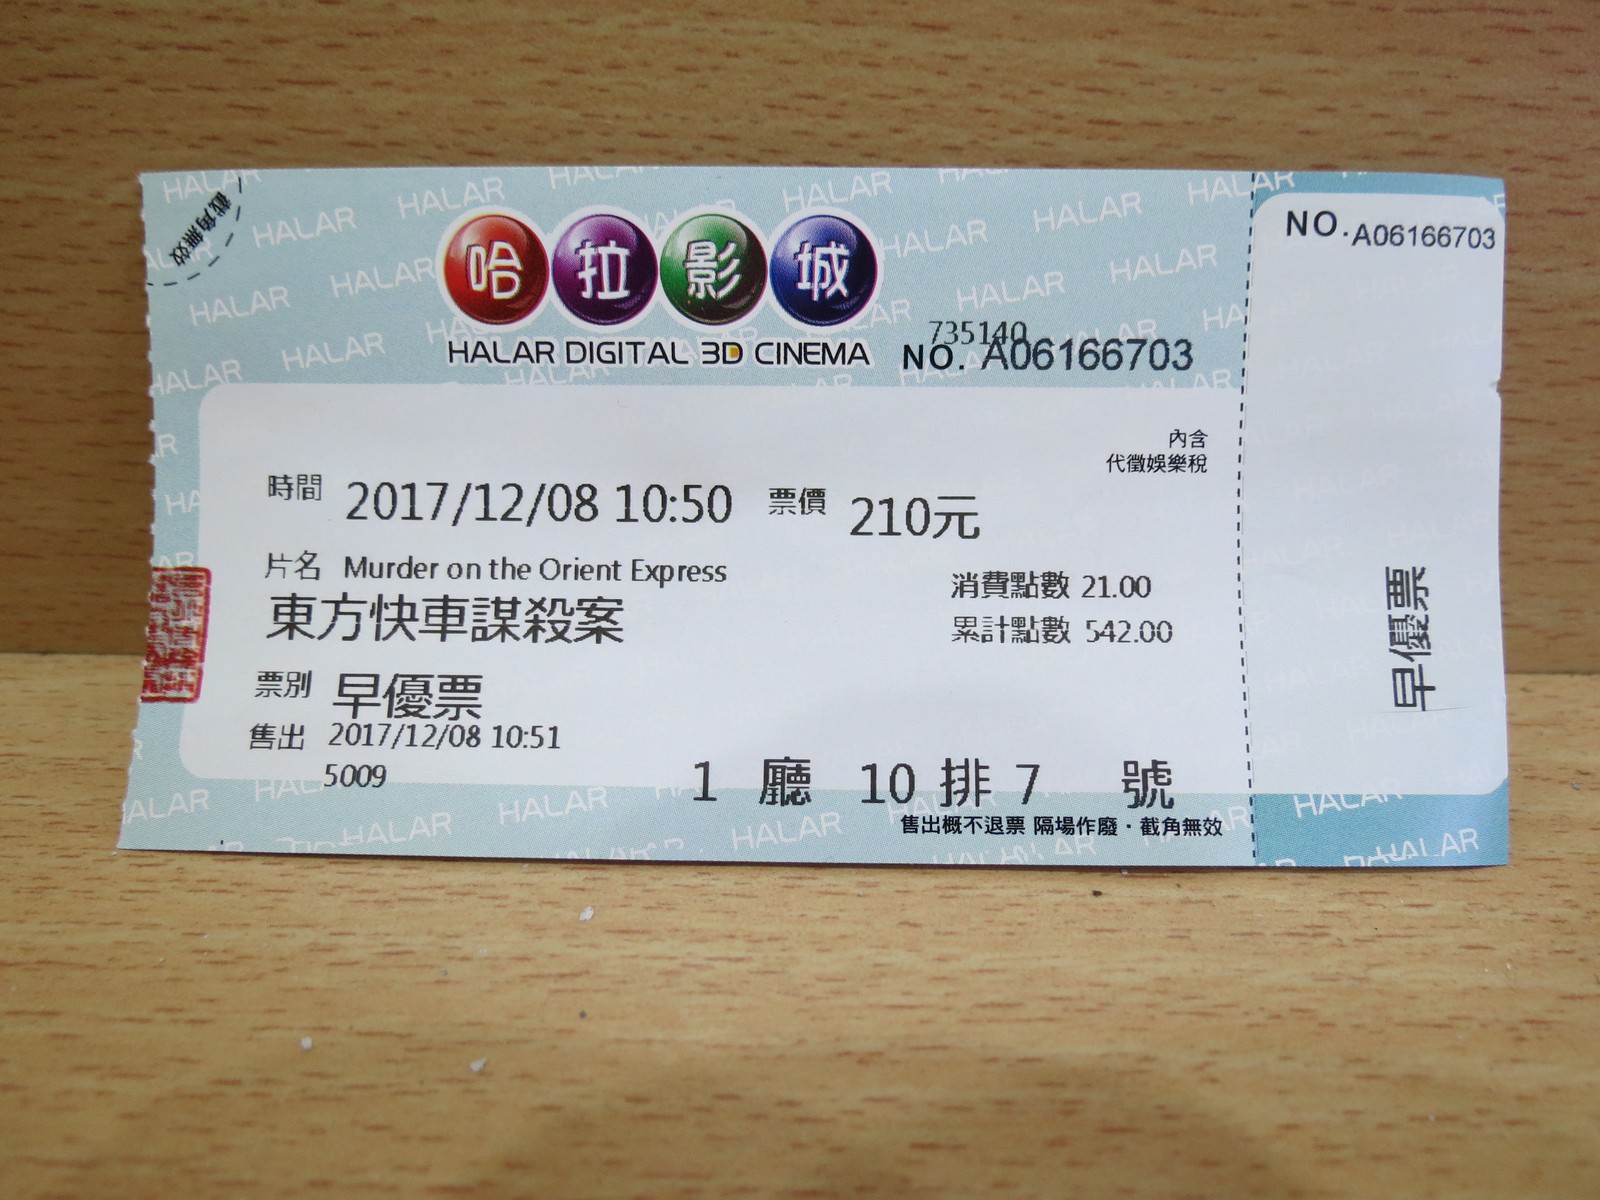 Movie, Murder on the Orient Express(美國, 2017) / 東方快車謀殺案(台灣.香港) / 东方快车谋杀案(中國), 電影票